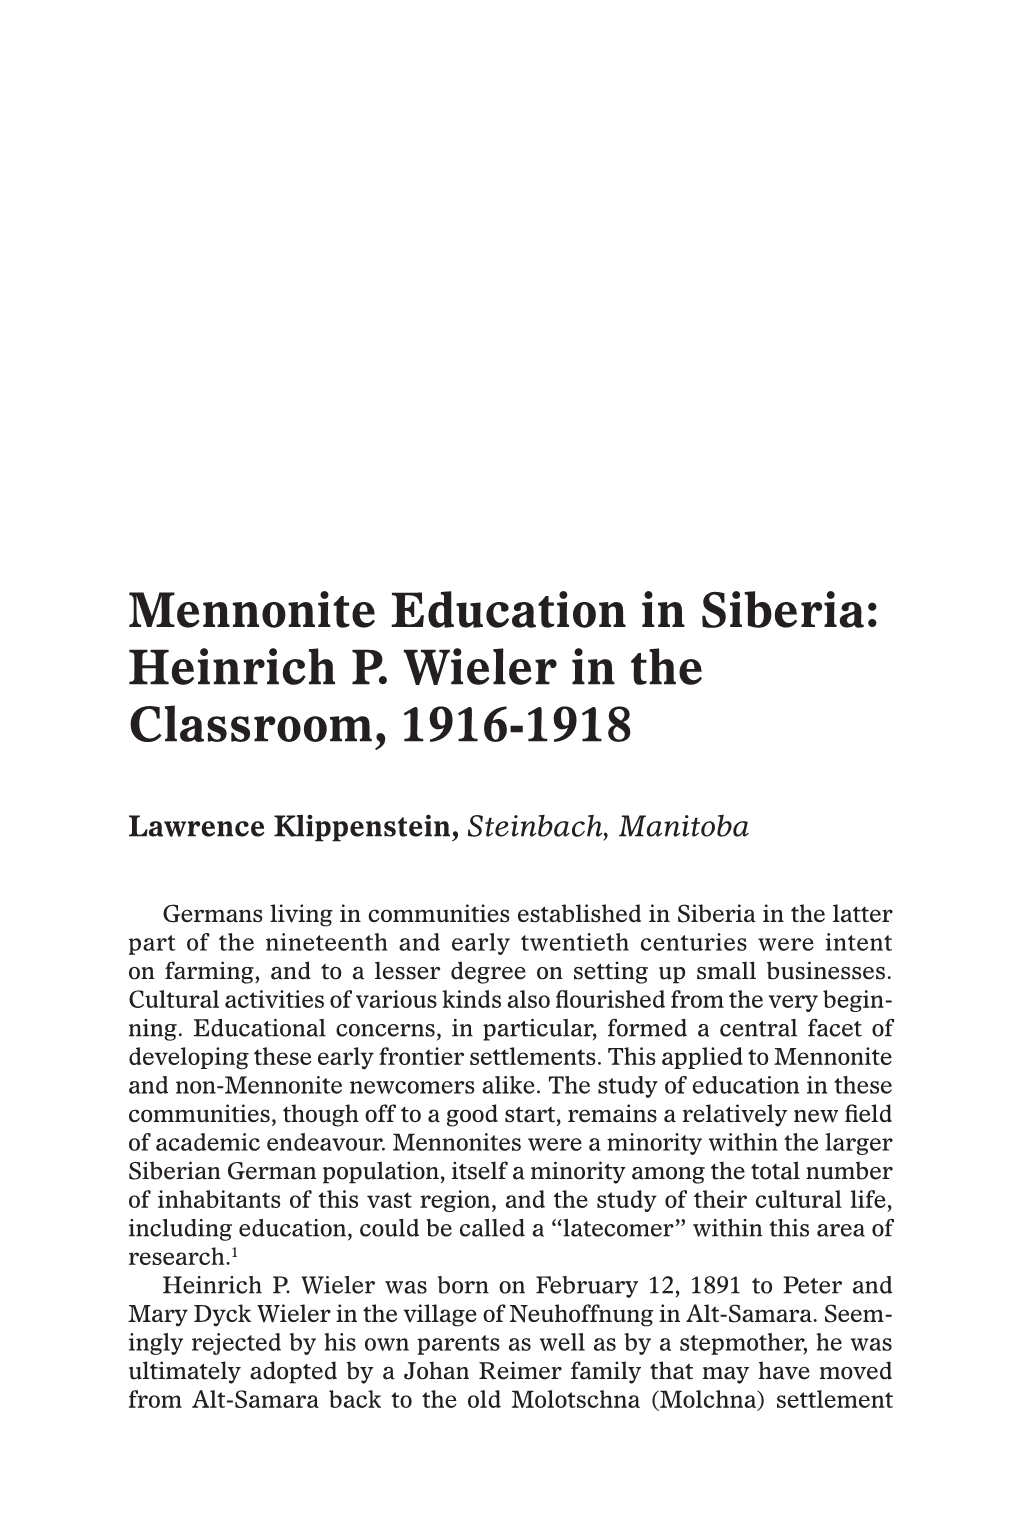 Mennonite Education in Siberia: Heinrich P. Wieler in the Classroom, 1916-1918